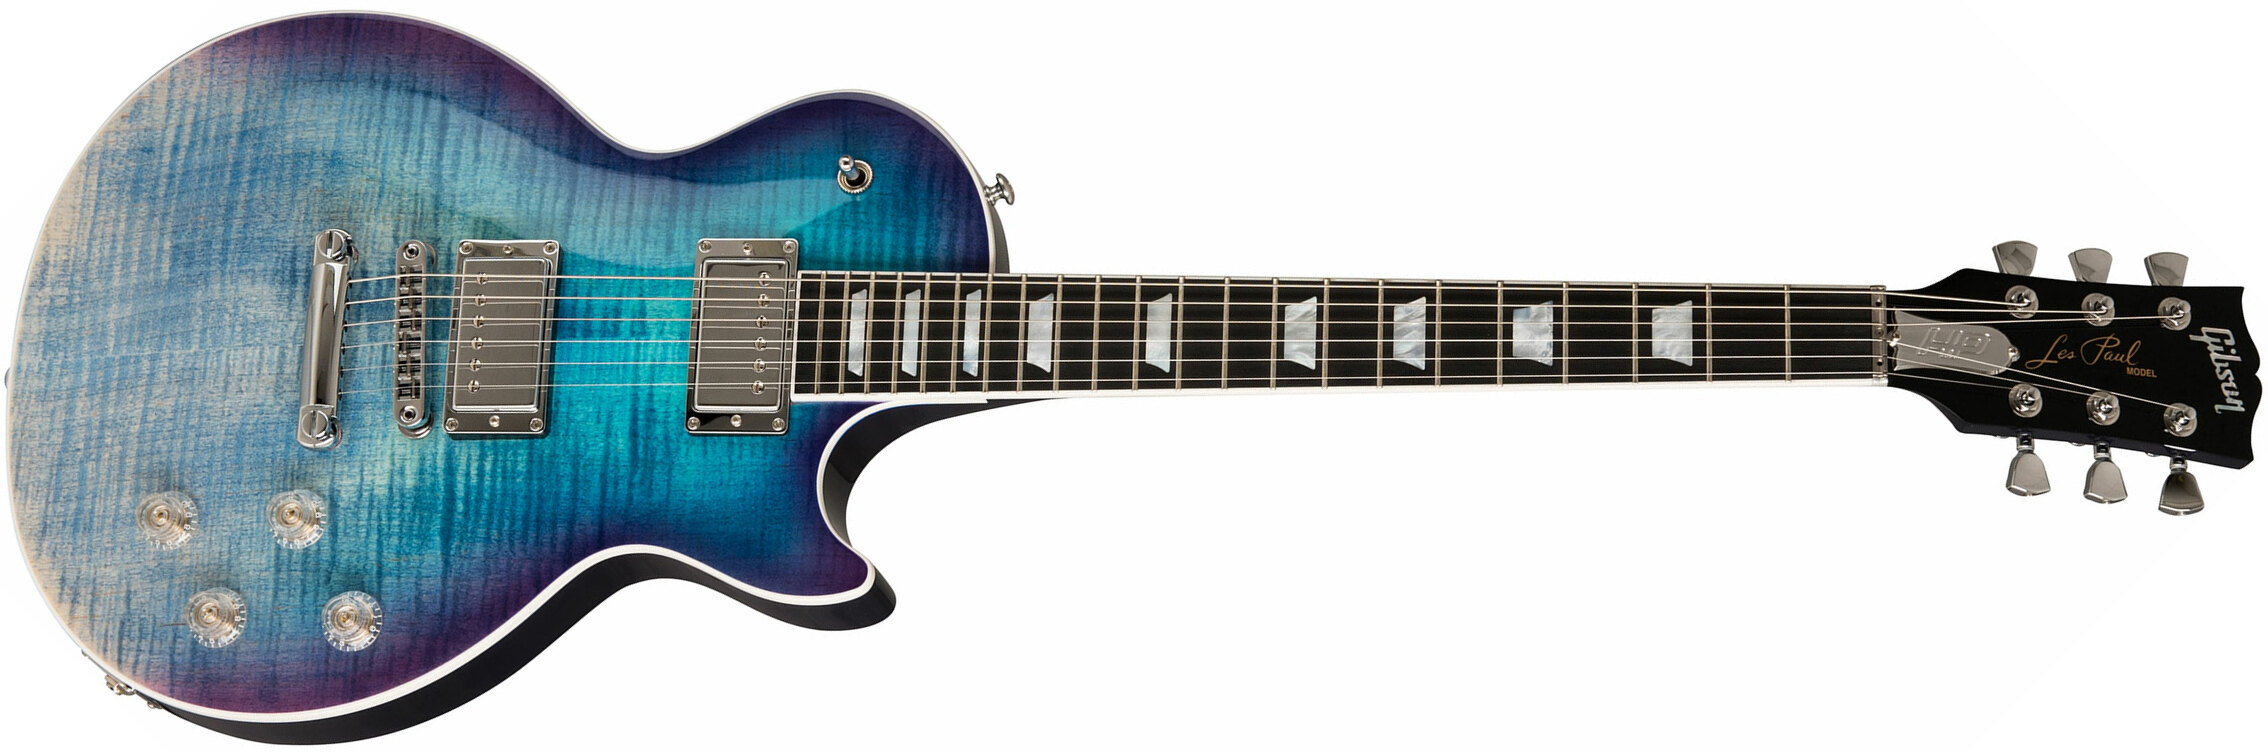 Gibson Les Paul Hp-ii High Performance 2019 Hh Ht Rw - Blueberry Fade - Guitare Électrique Single Cut - Main picture